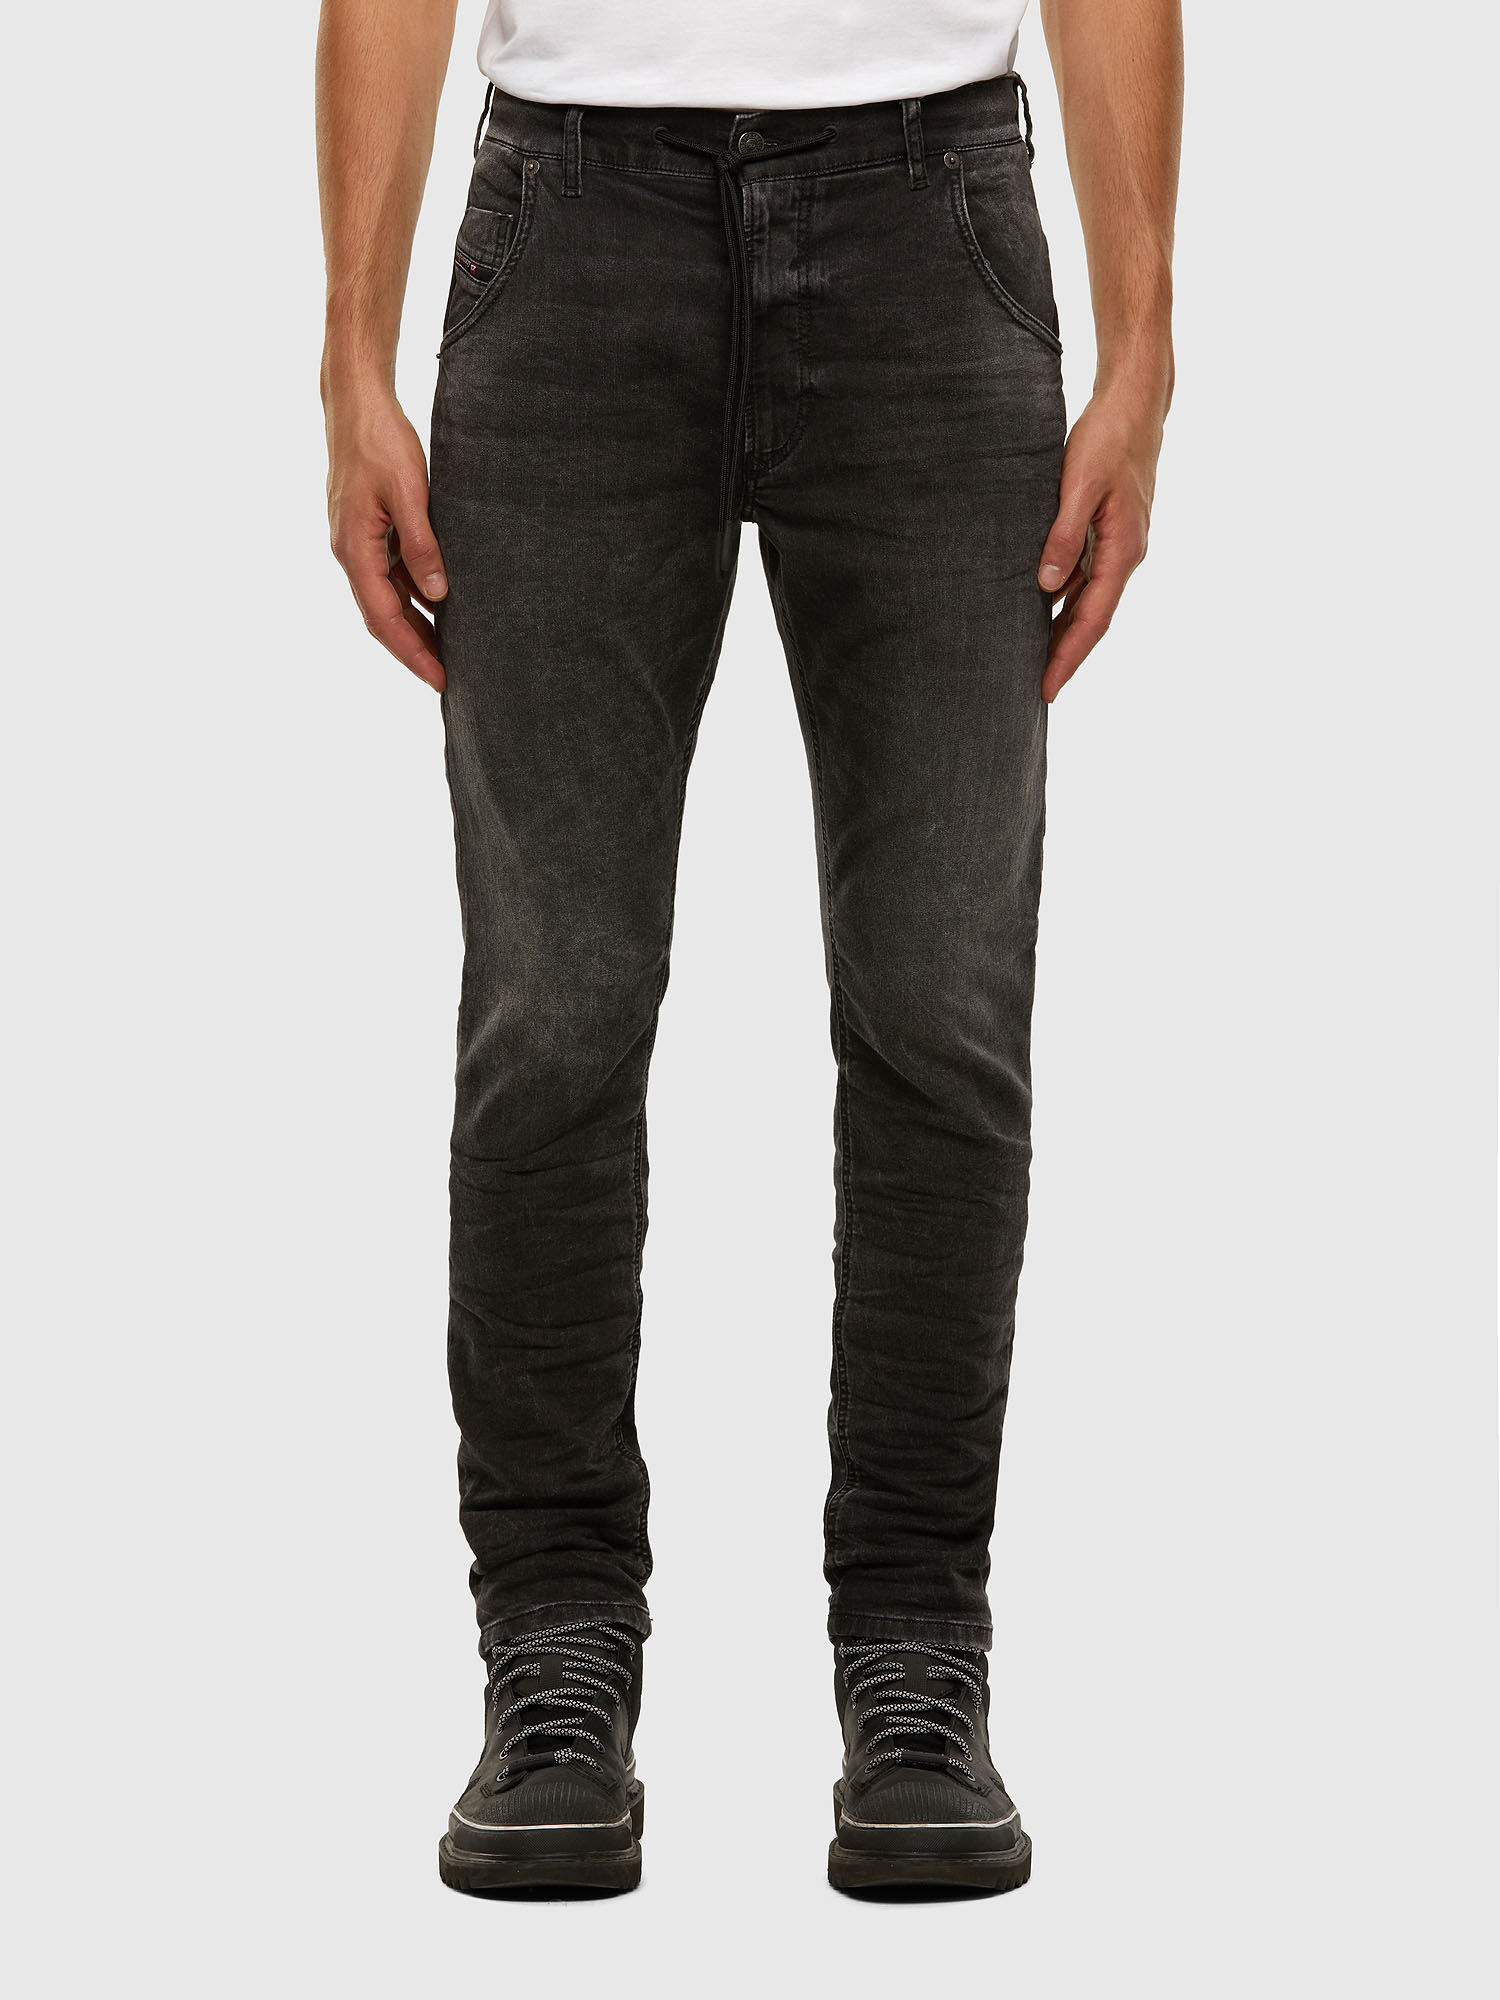 Krooley JoggJeans 009FZ Man: Tapered Black/Dark grey Jeans | Diesel